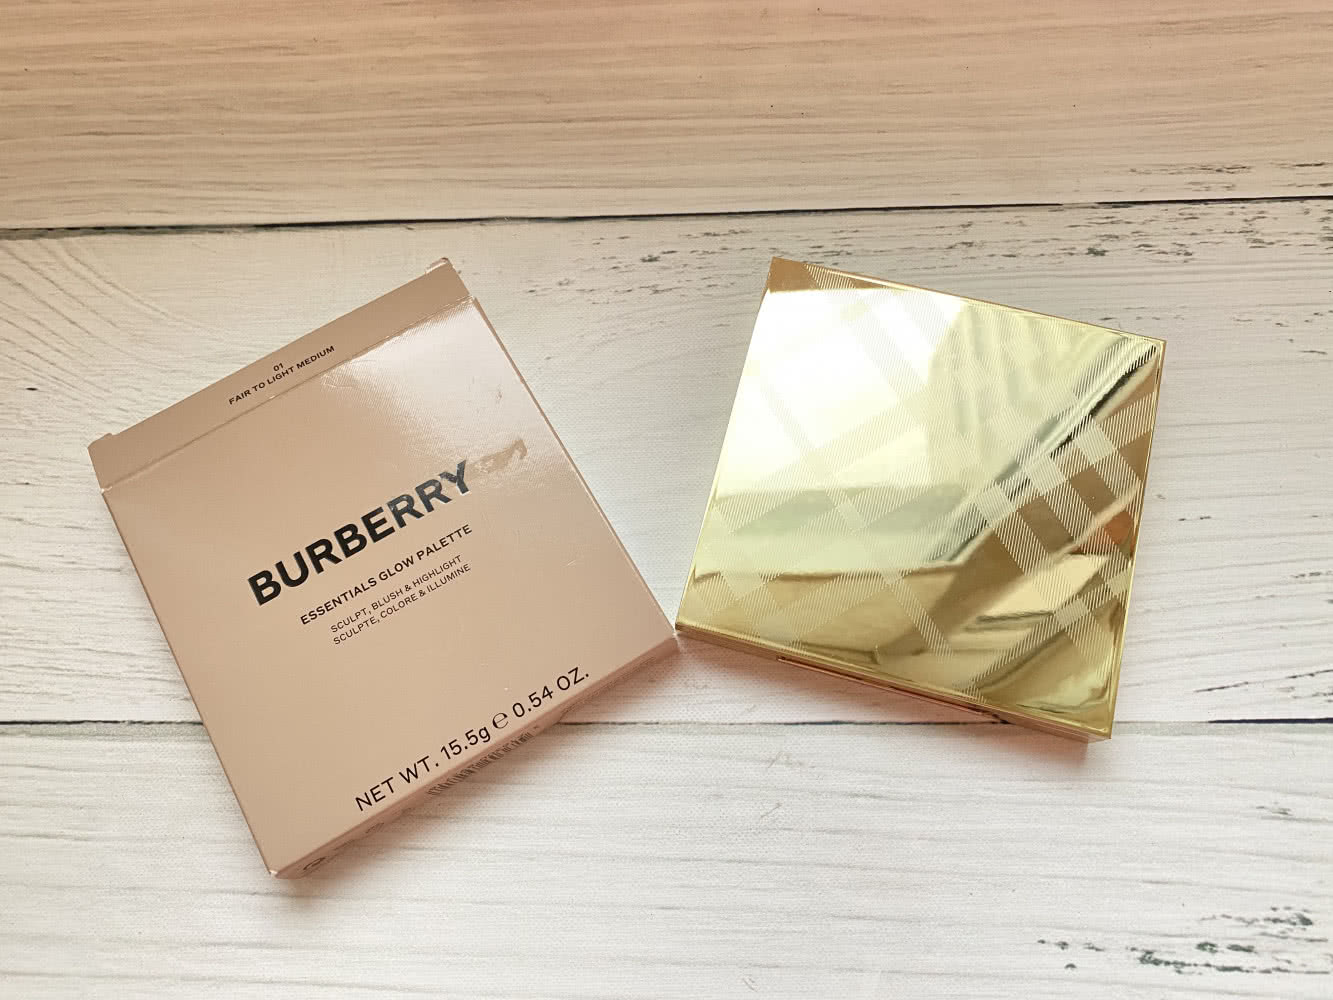 Burberry Essentials Glow Palette 01 Fair To Light Medium